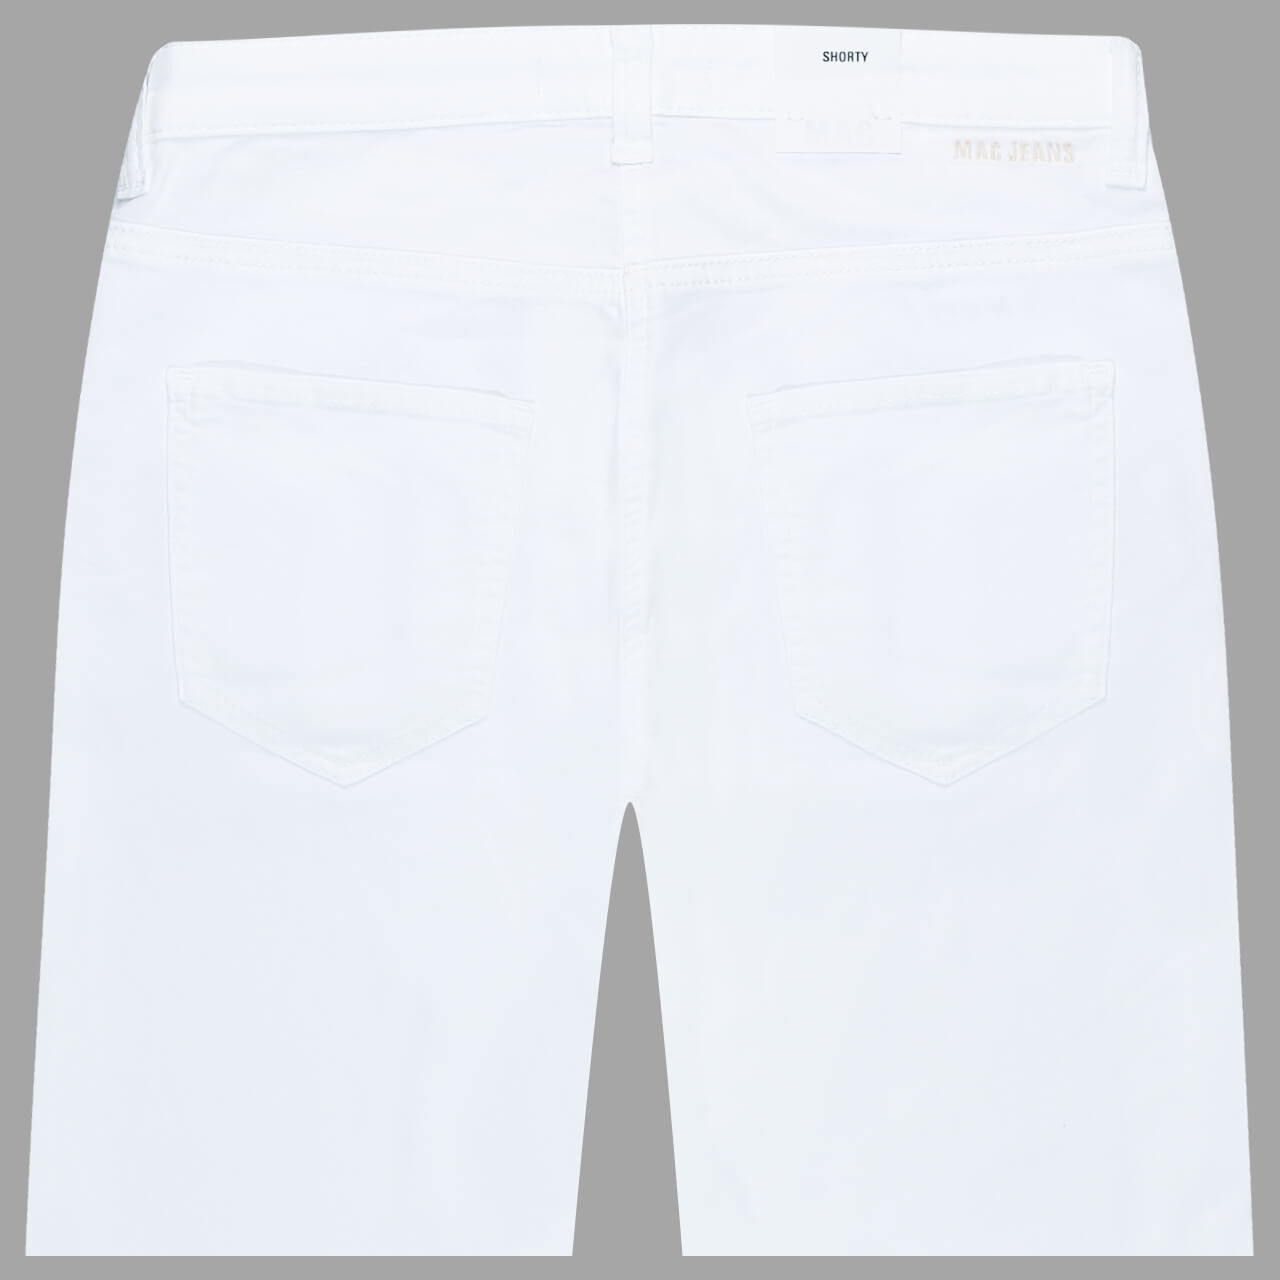 MAC Shorty Jeans white denim summer clean